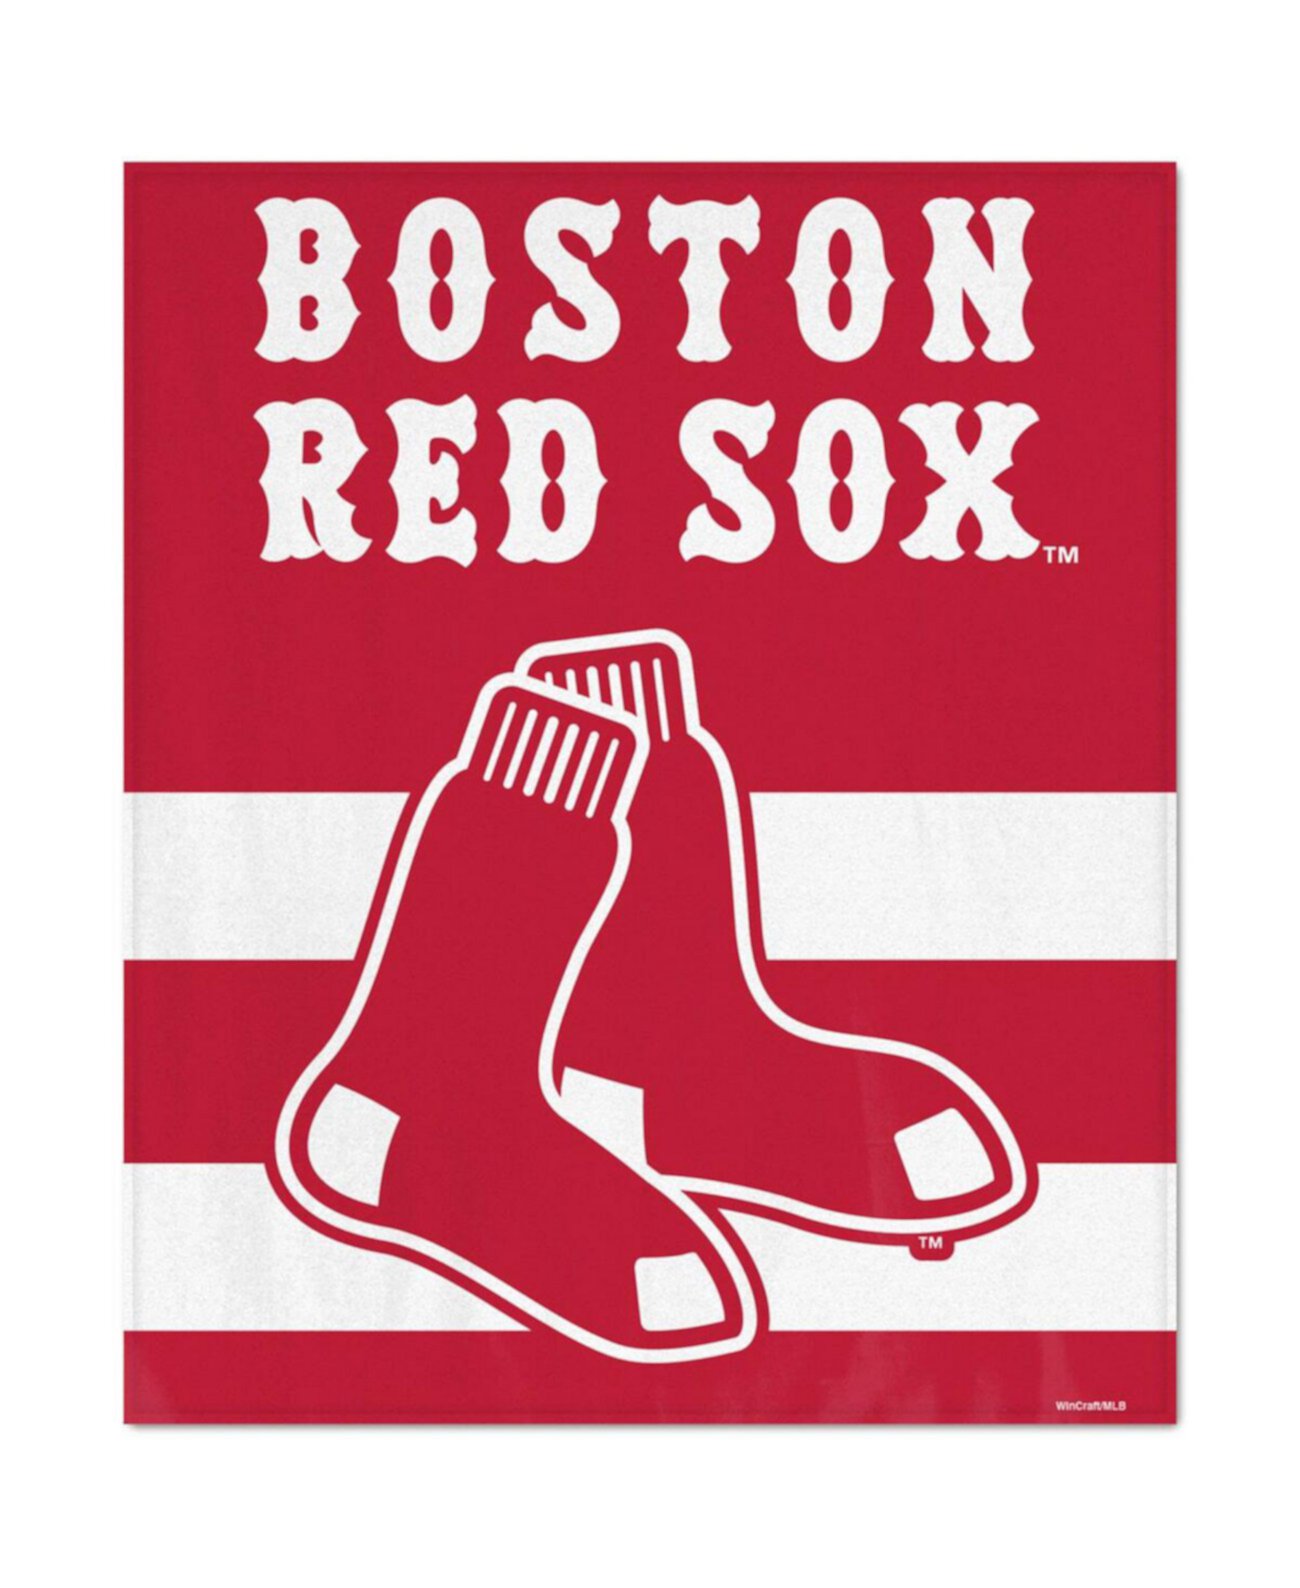 Плюшевое одеяло Boston Red Sox Ultra размером 50 x 60 дюймов Wincraft